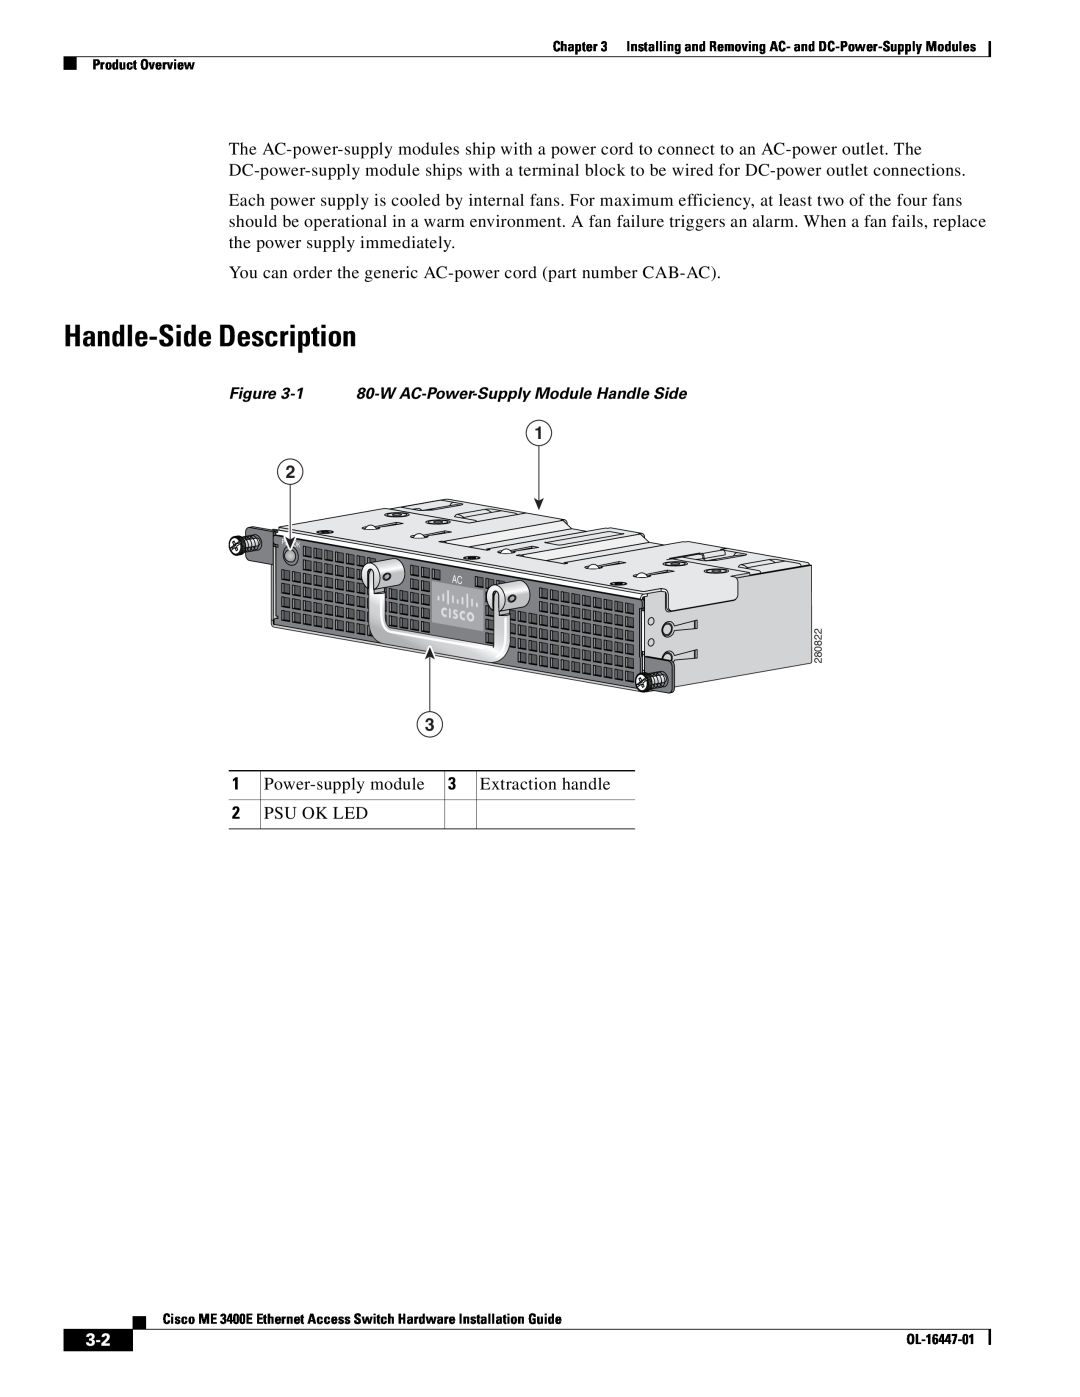 Cisco Systems OL-16447-01 manual Handle-Side Description 